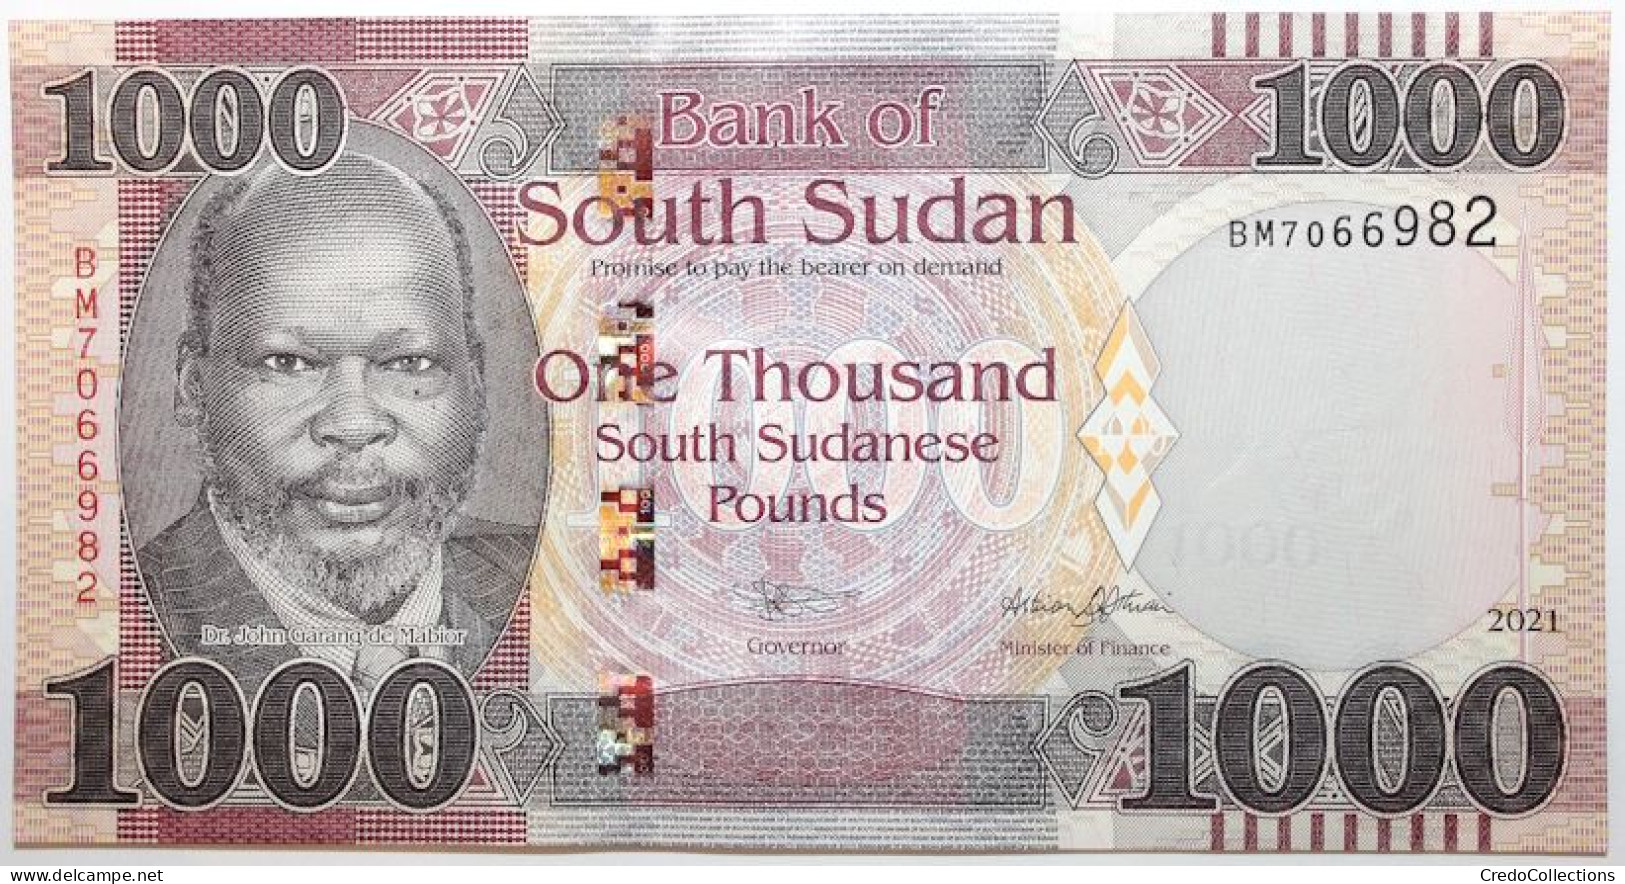 Soudan Du Sud - 1000 Pounds - 2021 - PICK 17b - NEUF - South Sudan